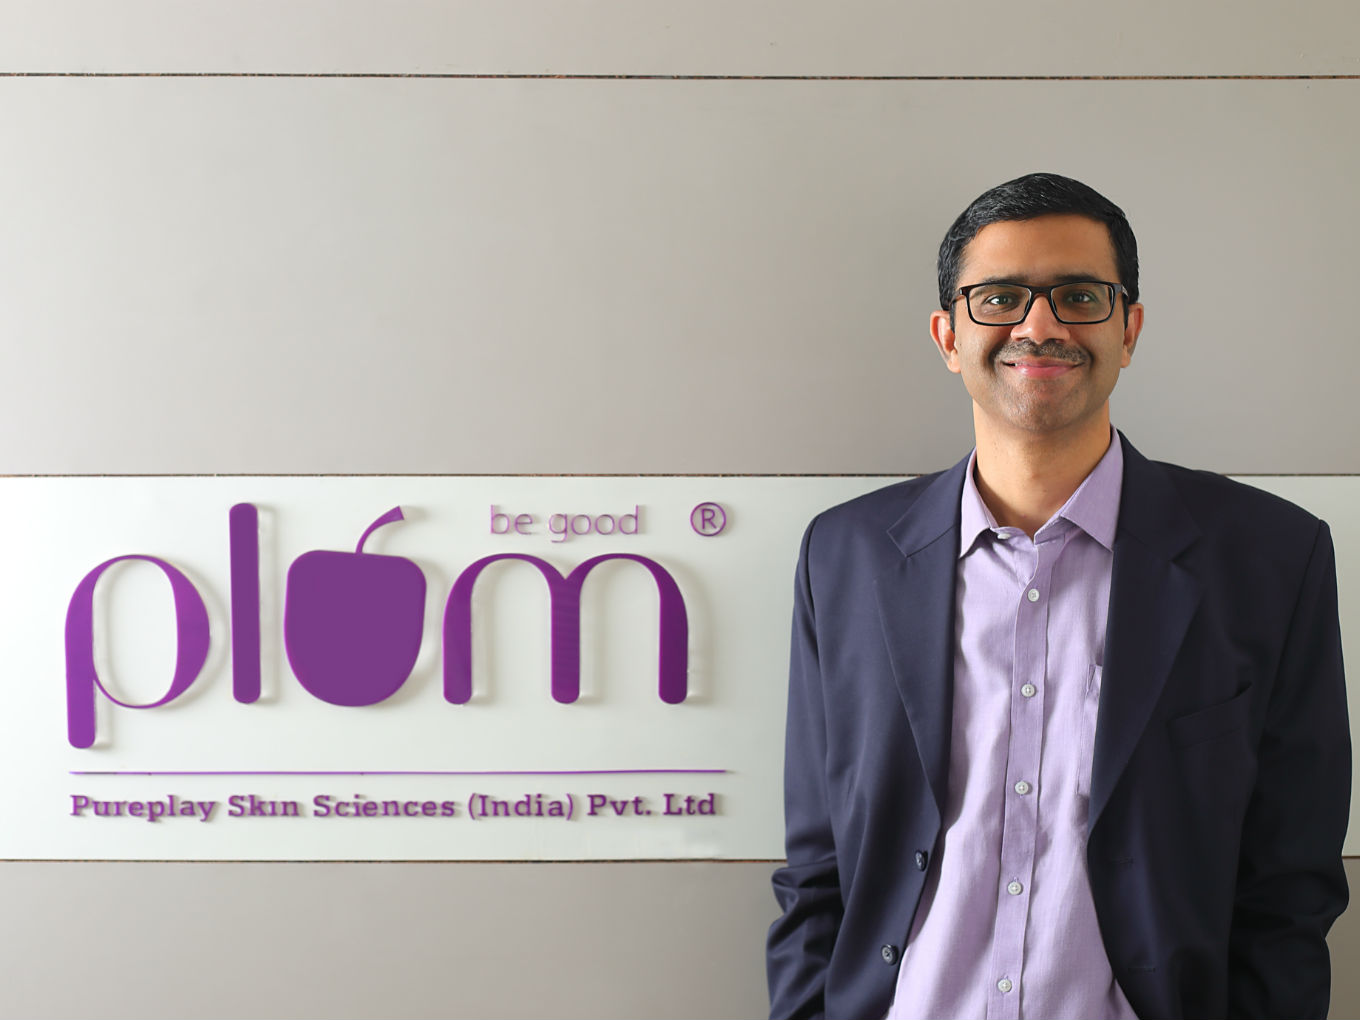 skincare startup plum raises series a funding from unilever